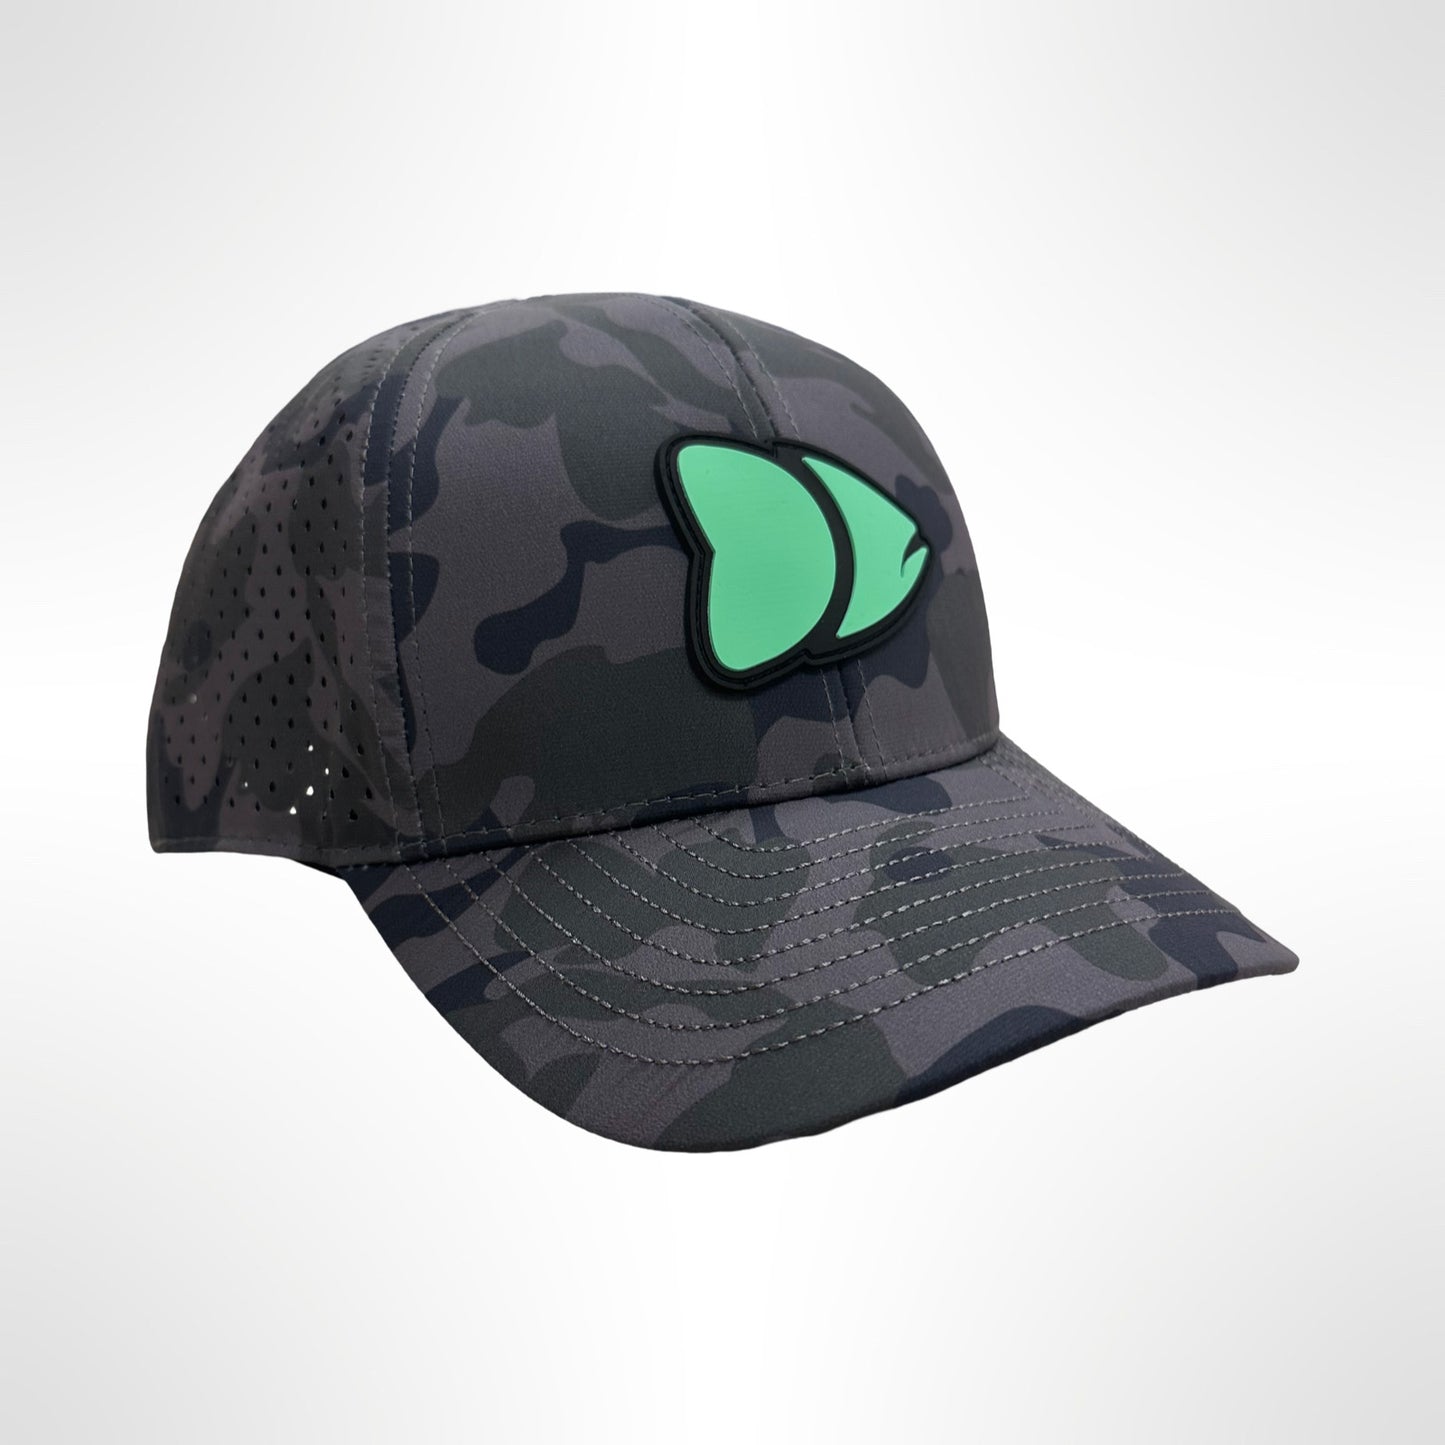 DB Camo Hat Waterproof Snapback Teal Fishing Hat